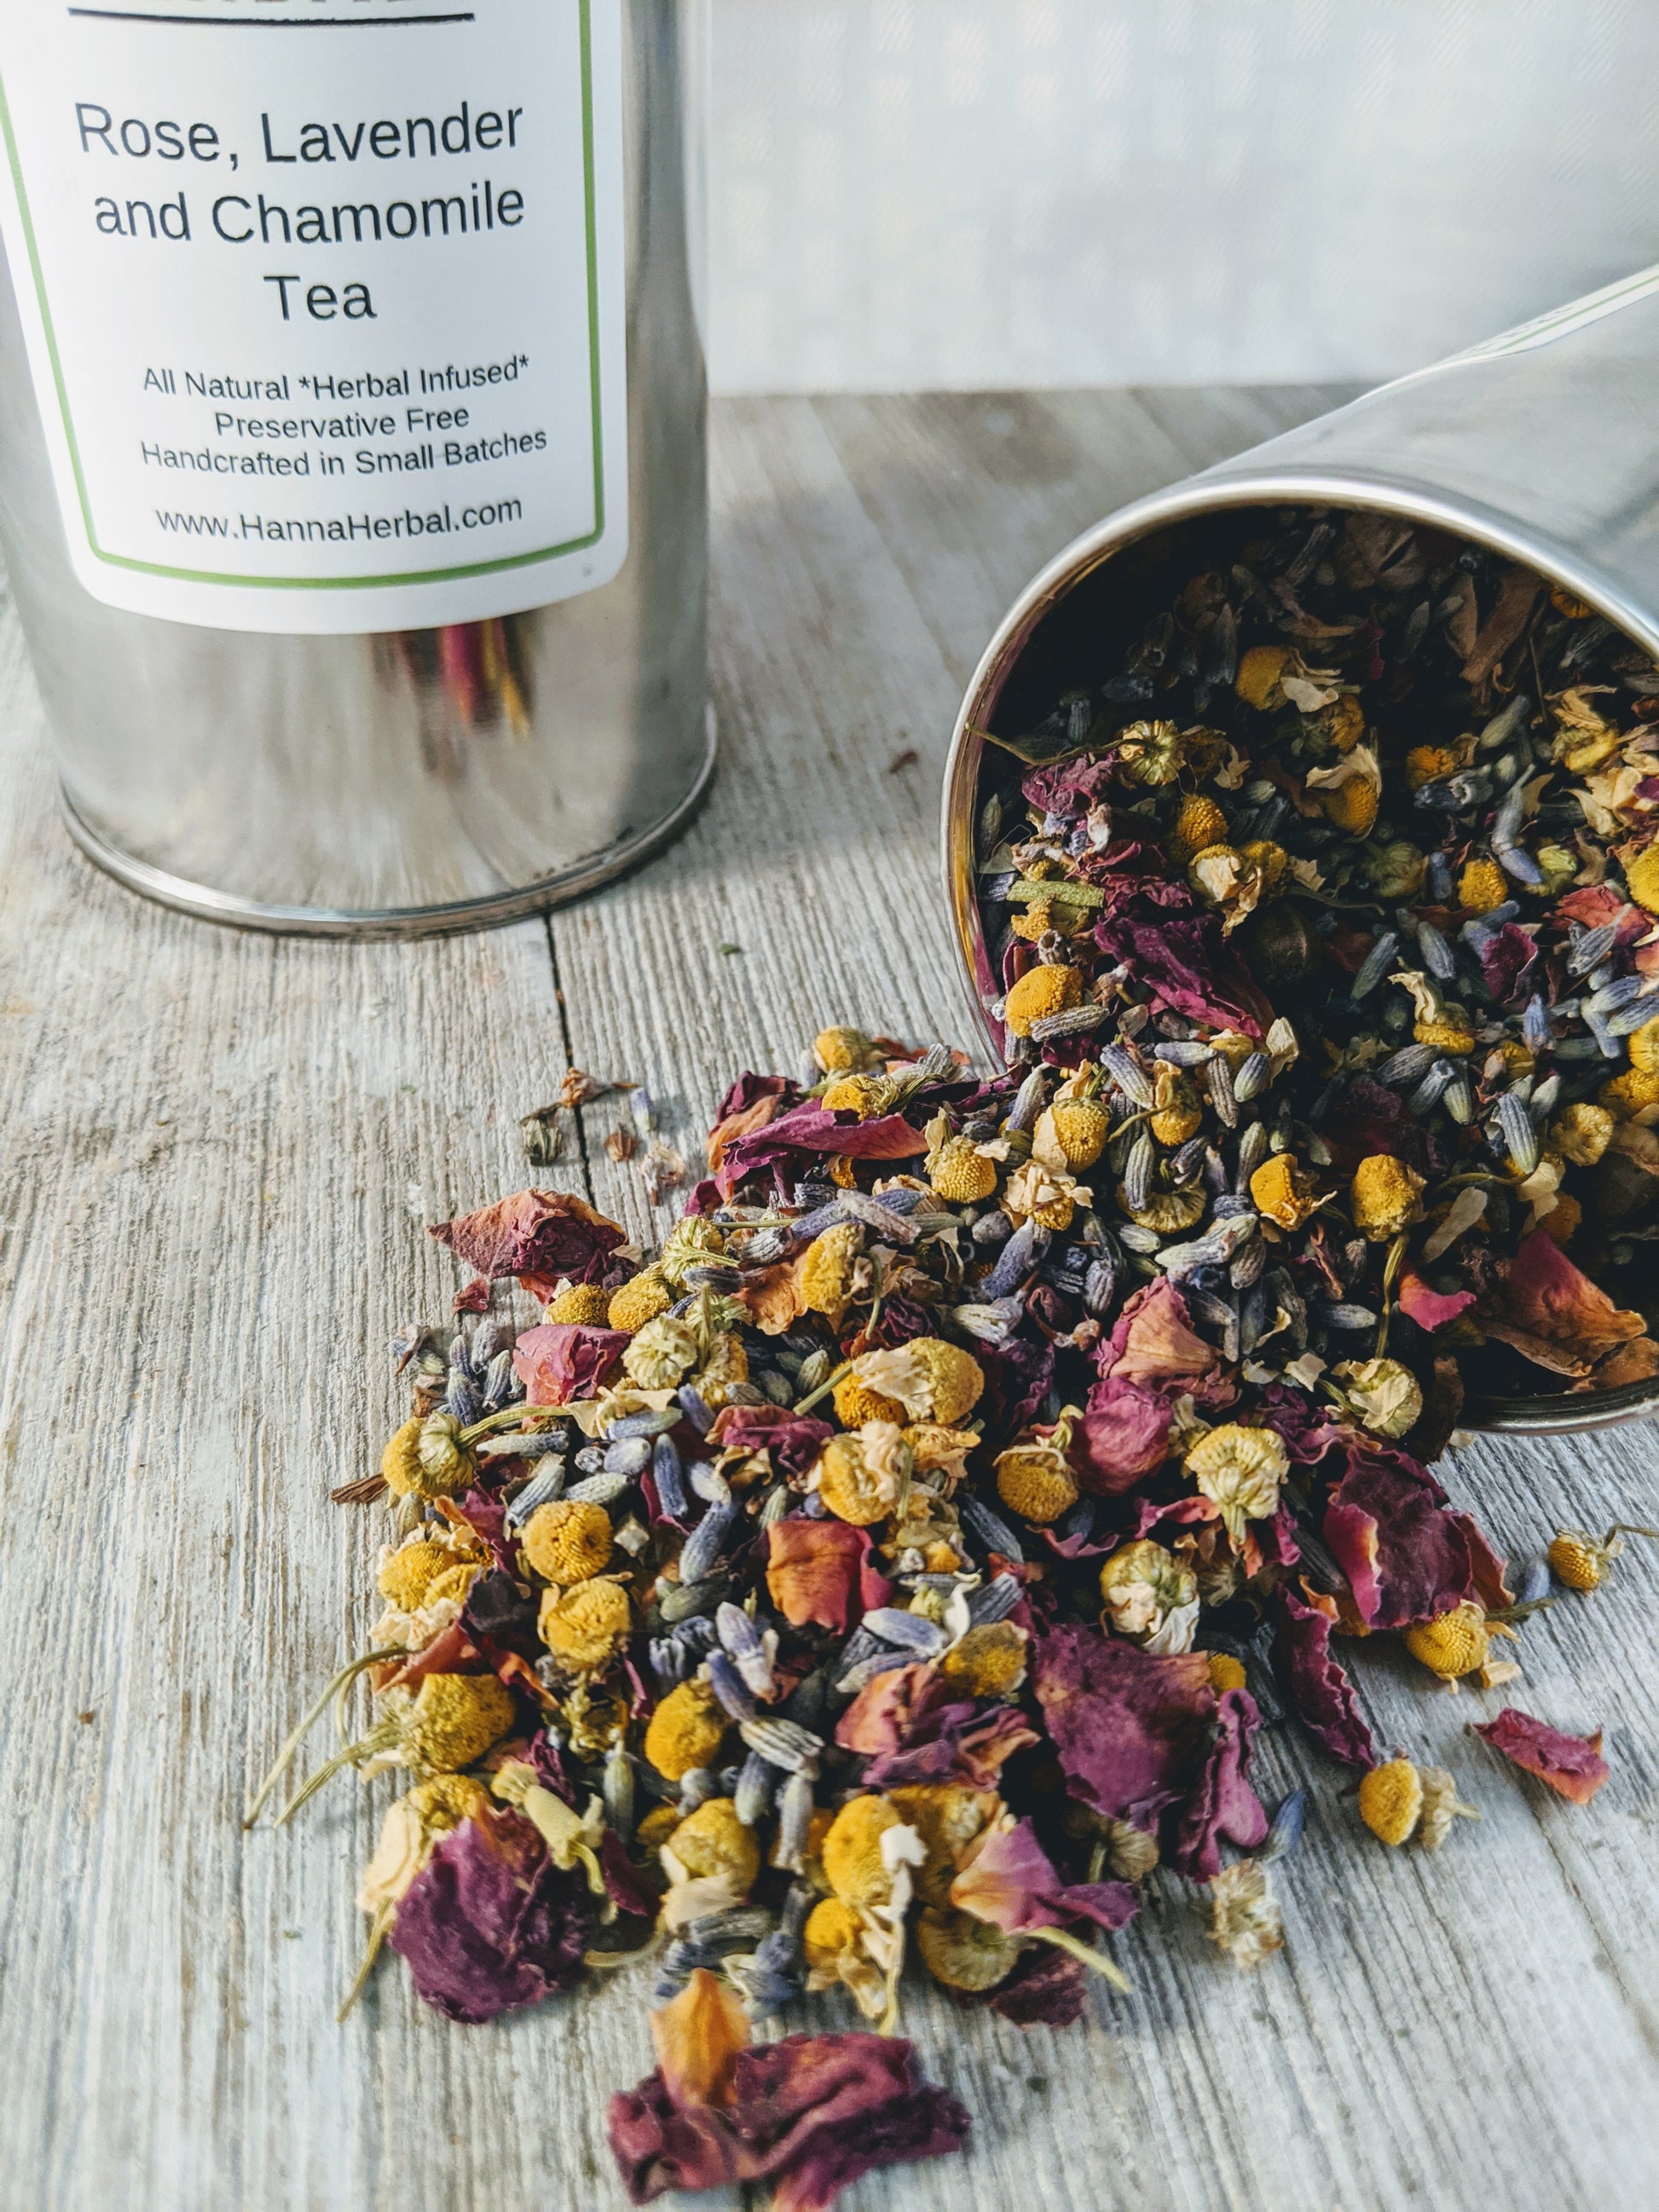 Rose Lavender and Chamomile Tea - Hanna Herbals